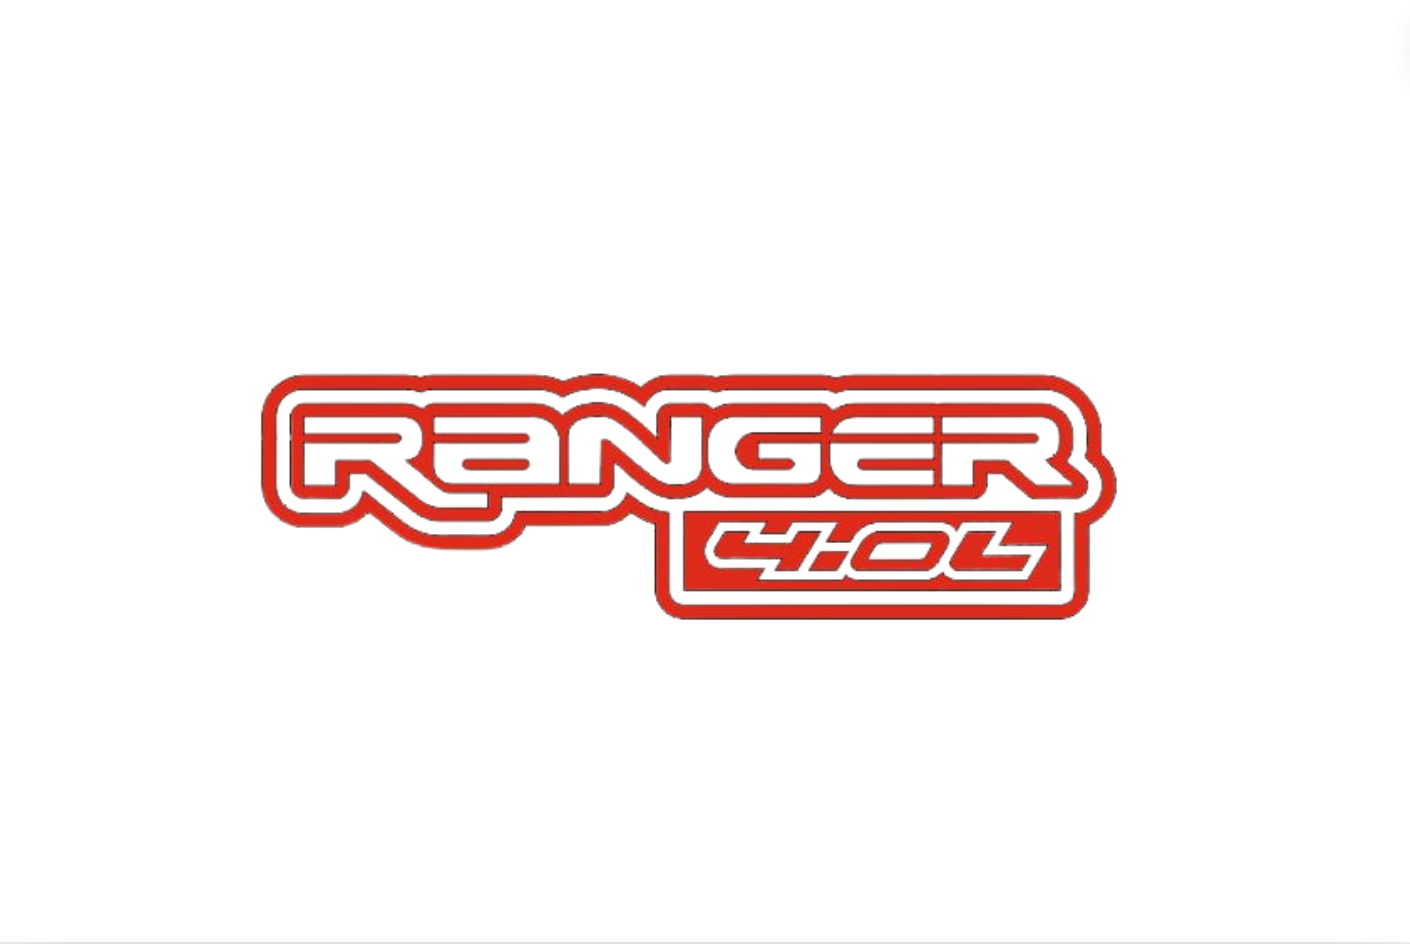 Ford Ranger Radiator grille emblem with Ranger 4.0L logo